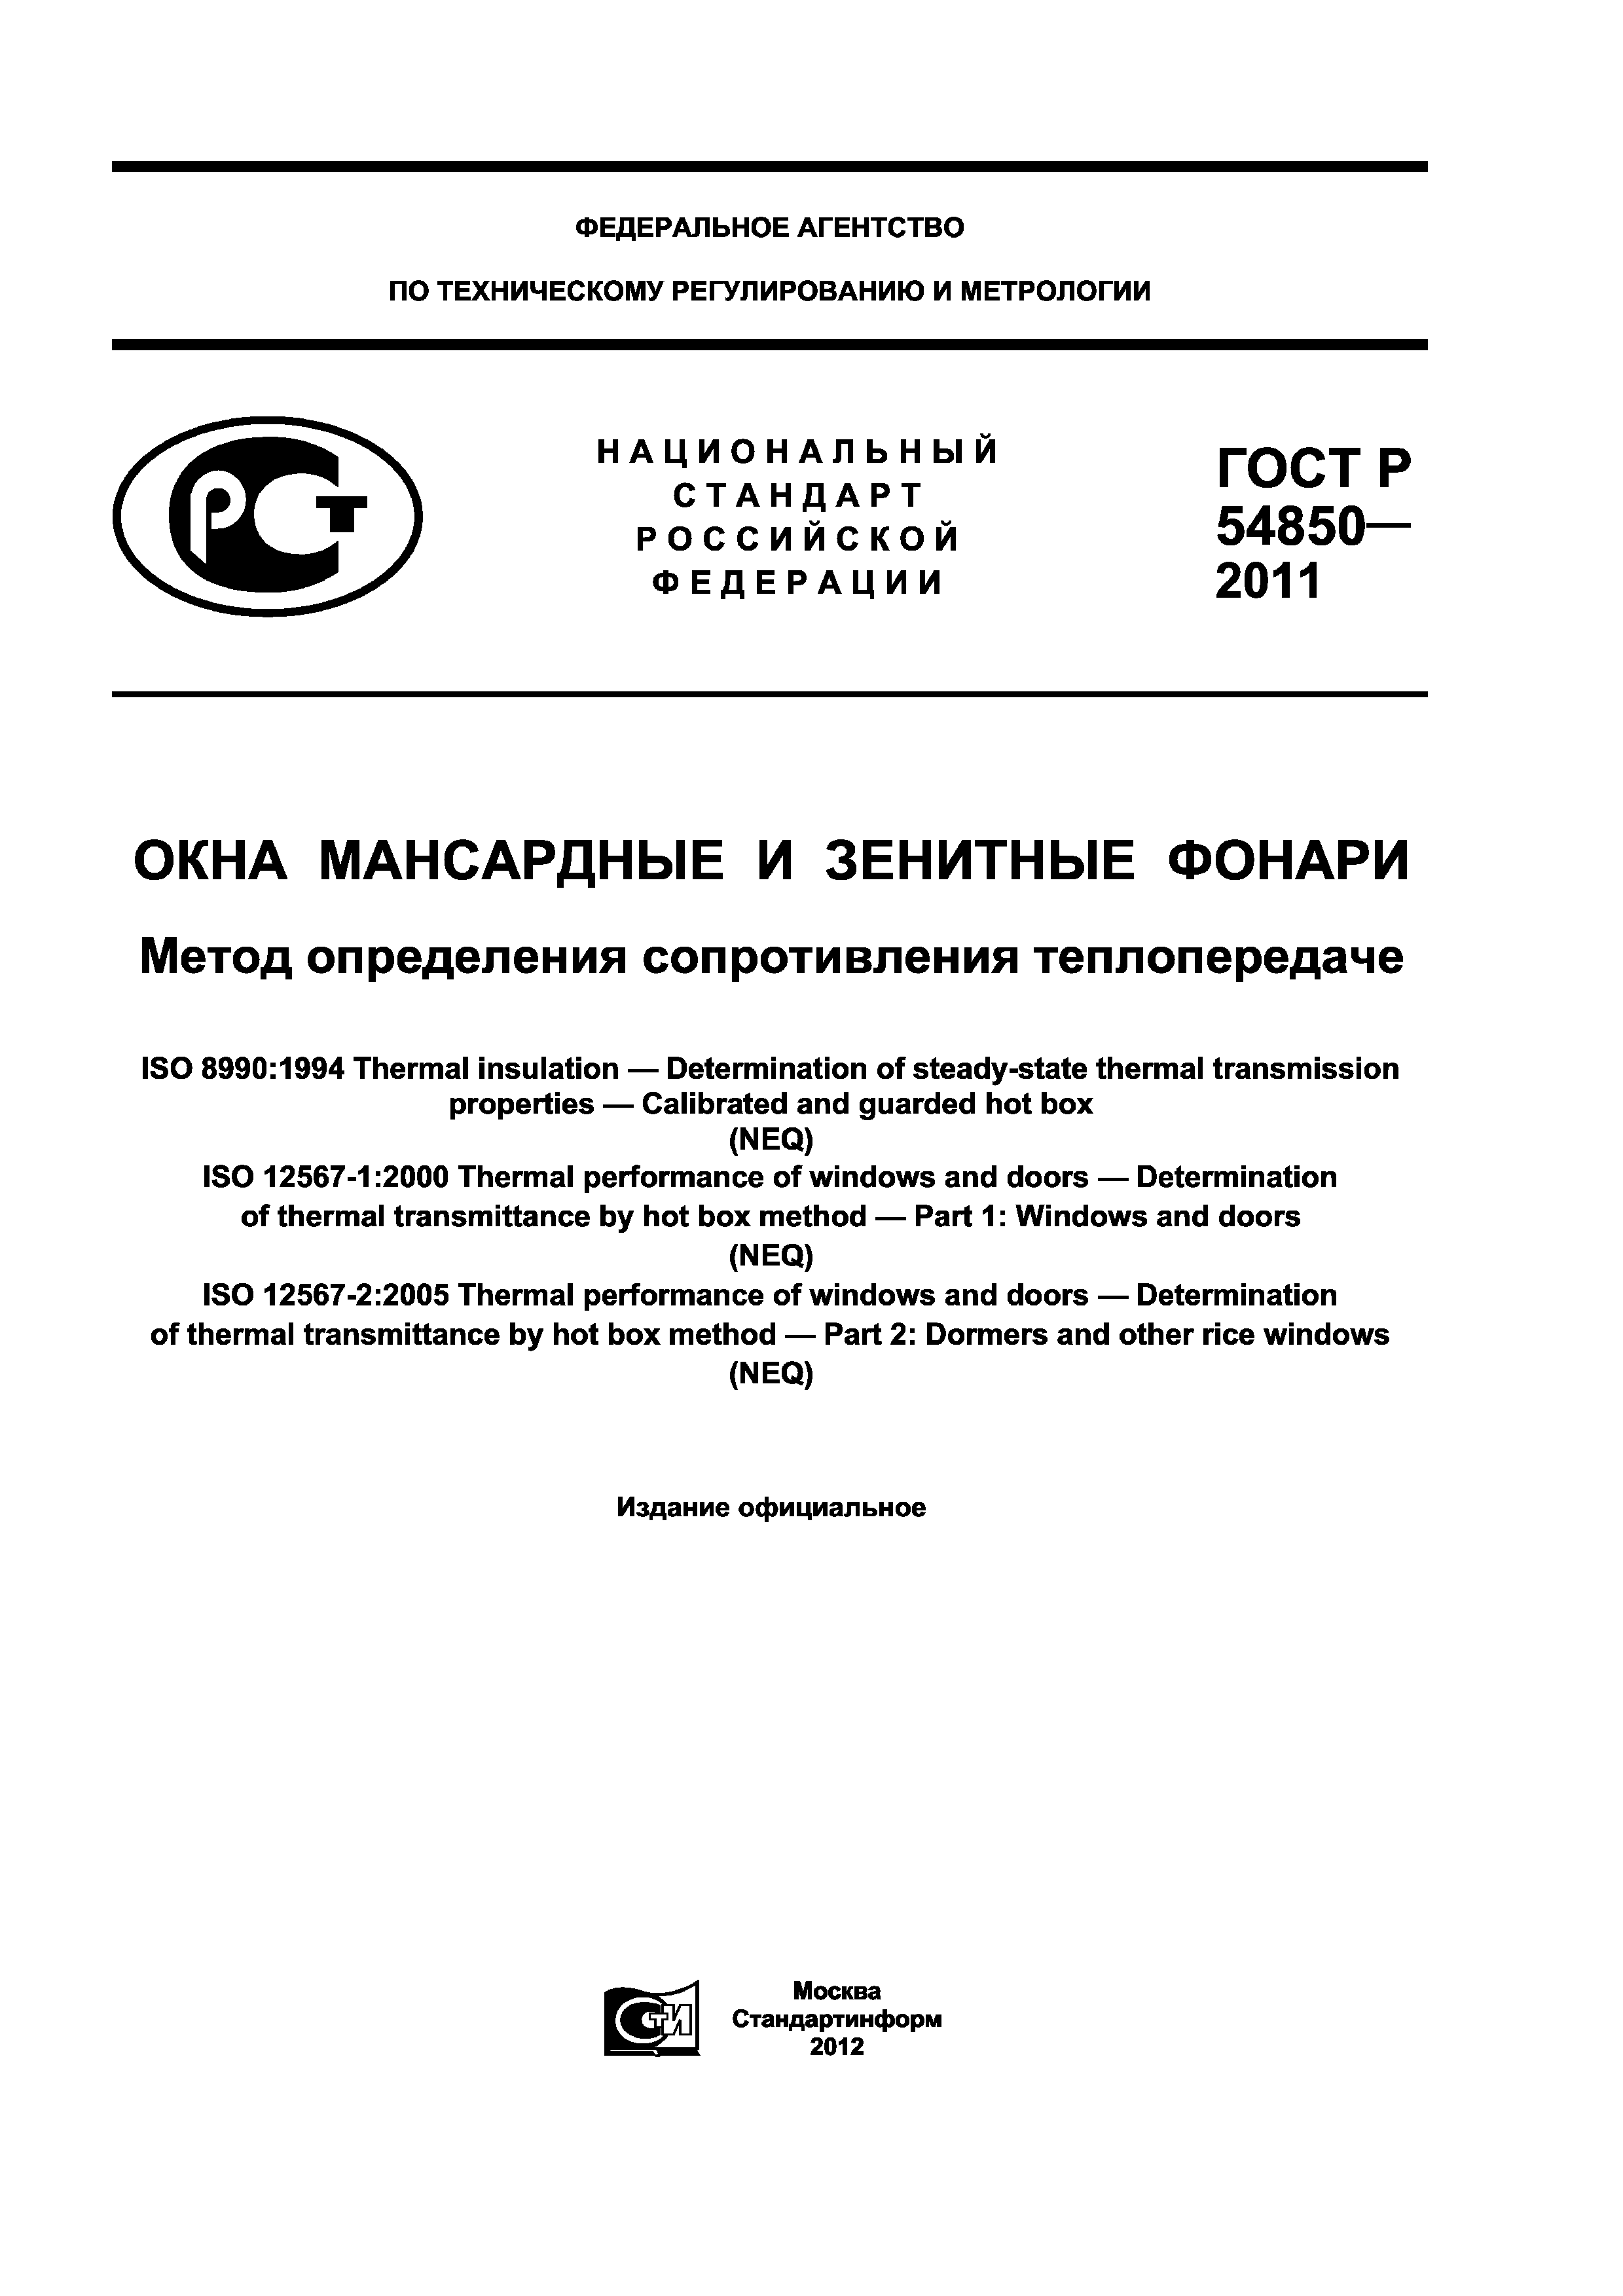 ГОСТ Р 54850-2011